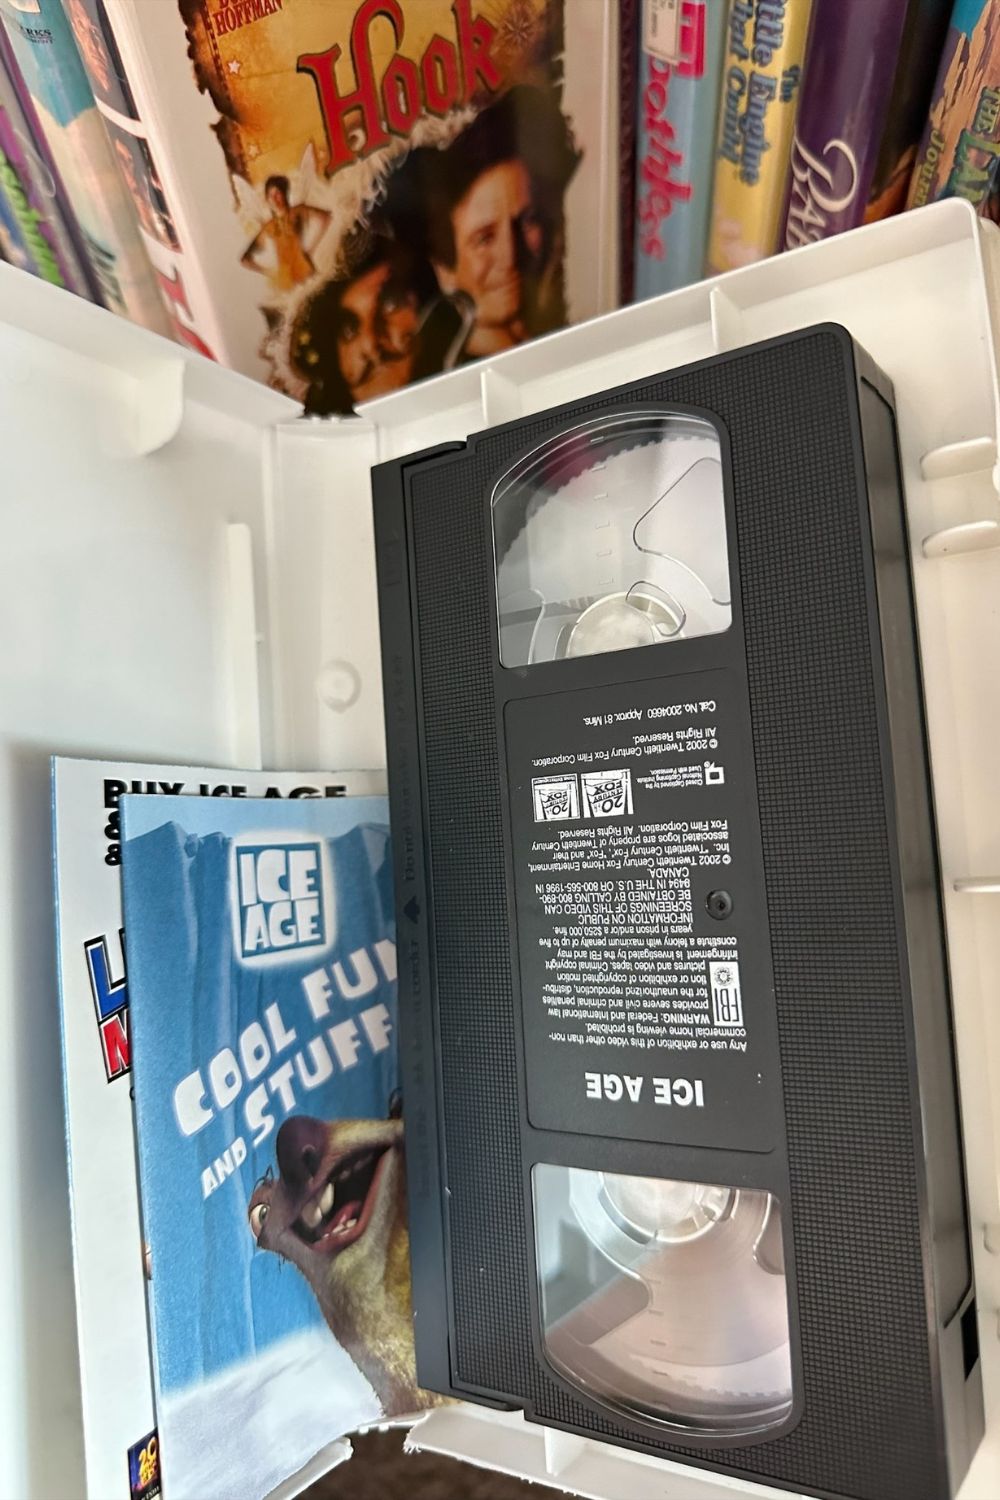 ICE AGE VHS*